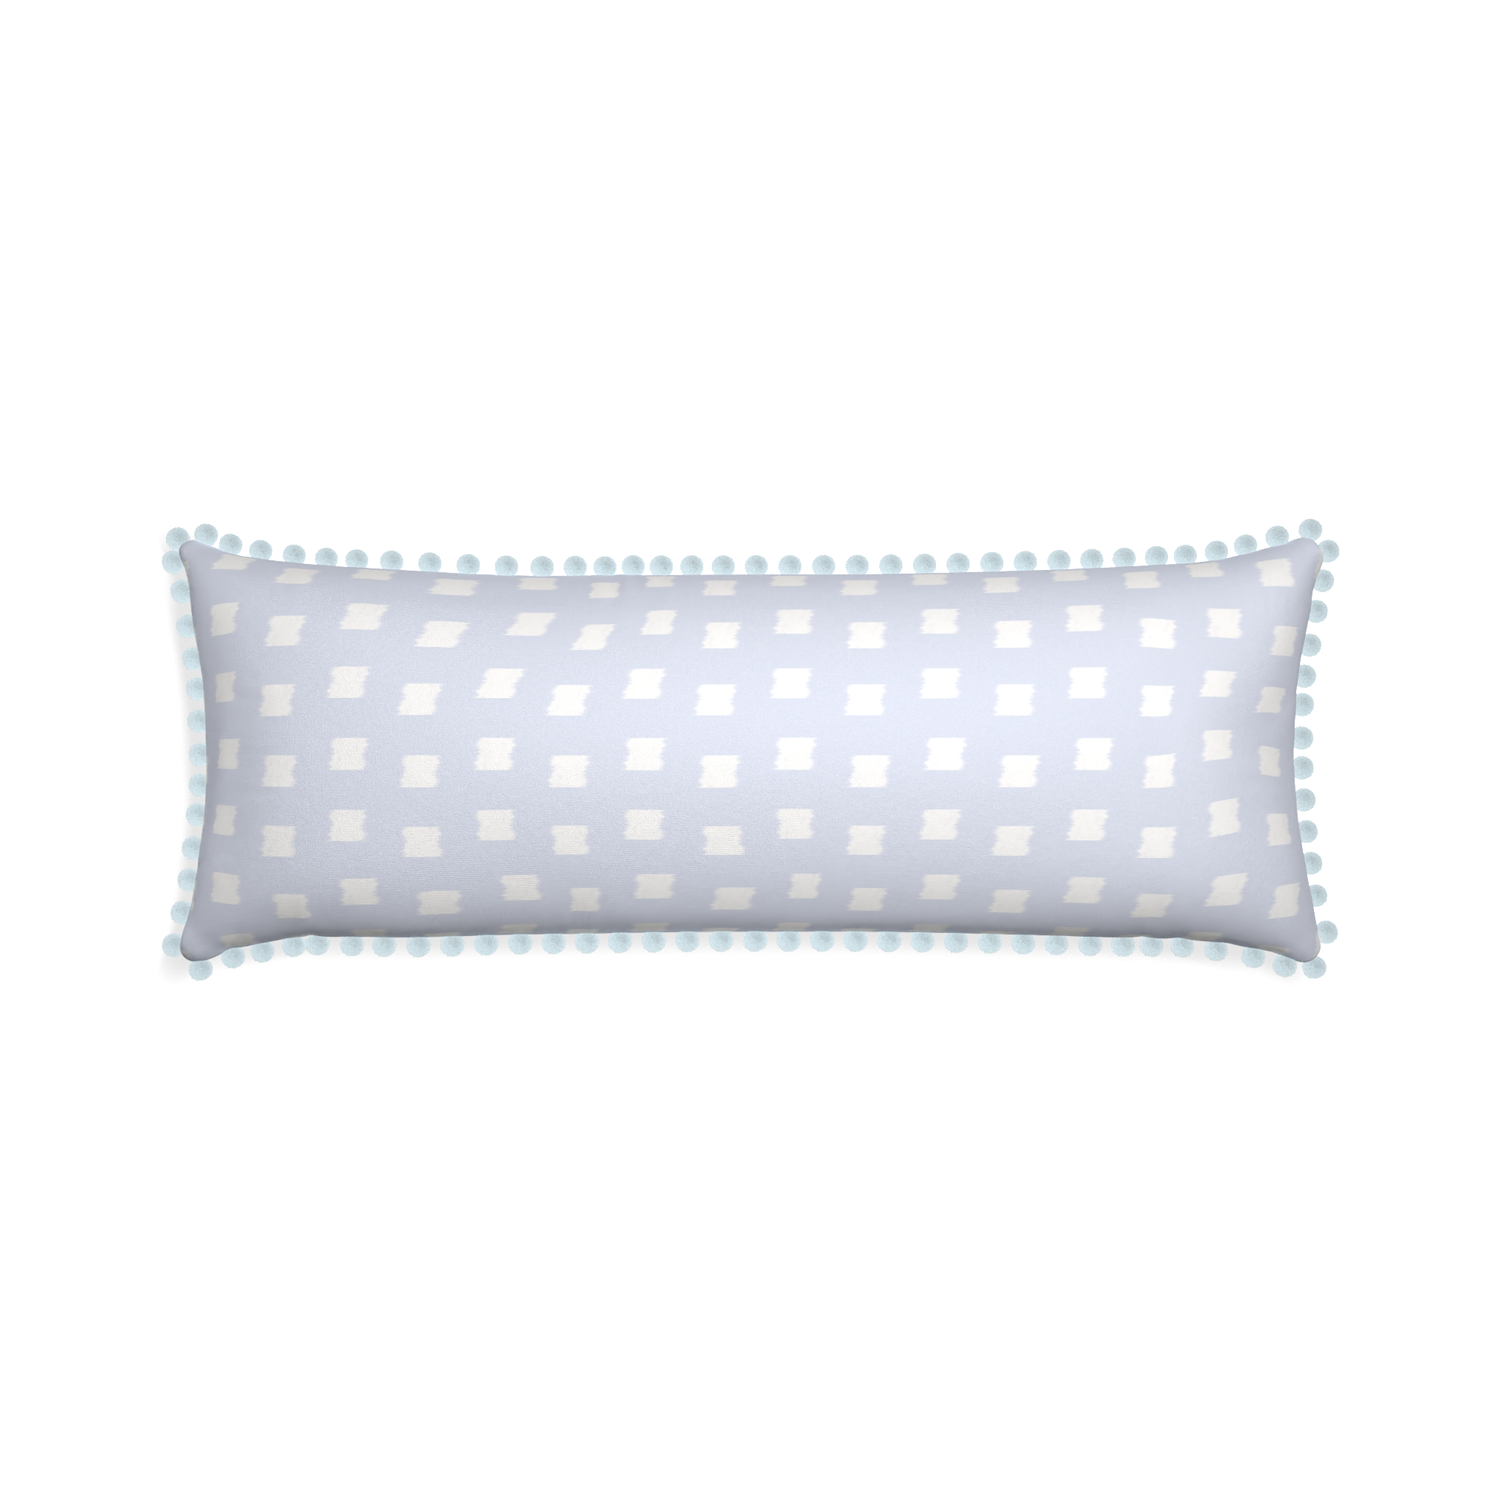 Xl-lumbar denton custom pillow with powder pom pom on white background